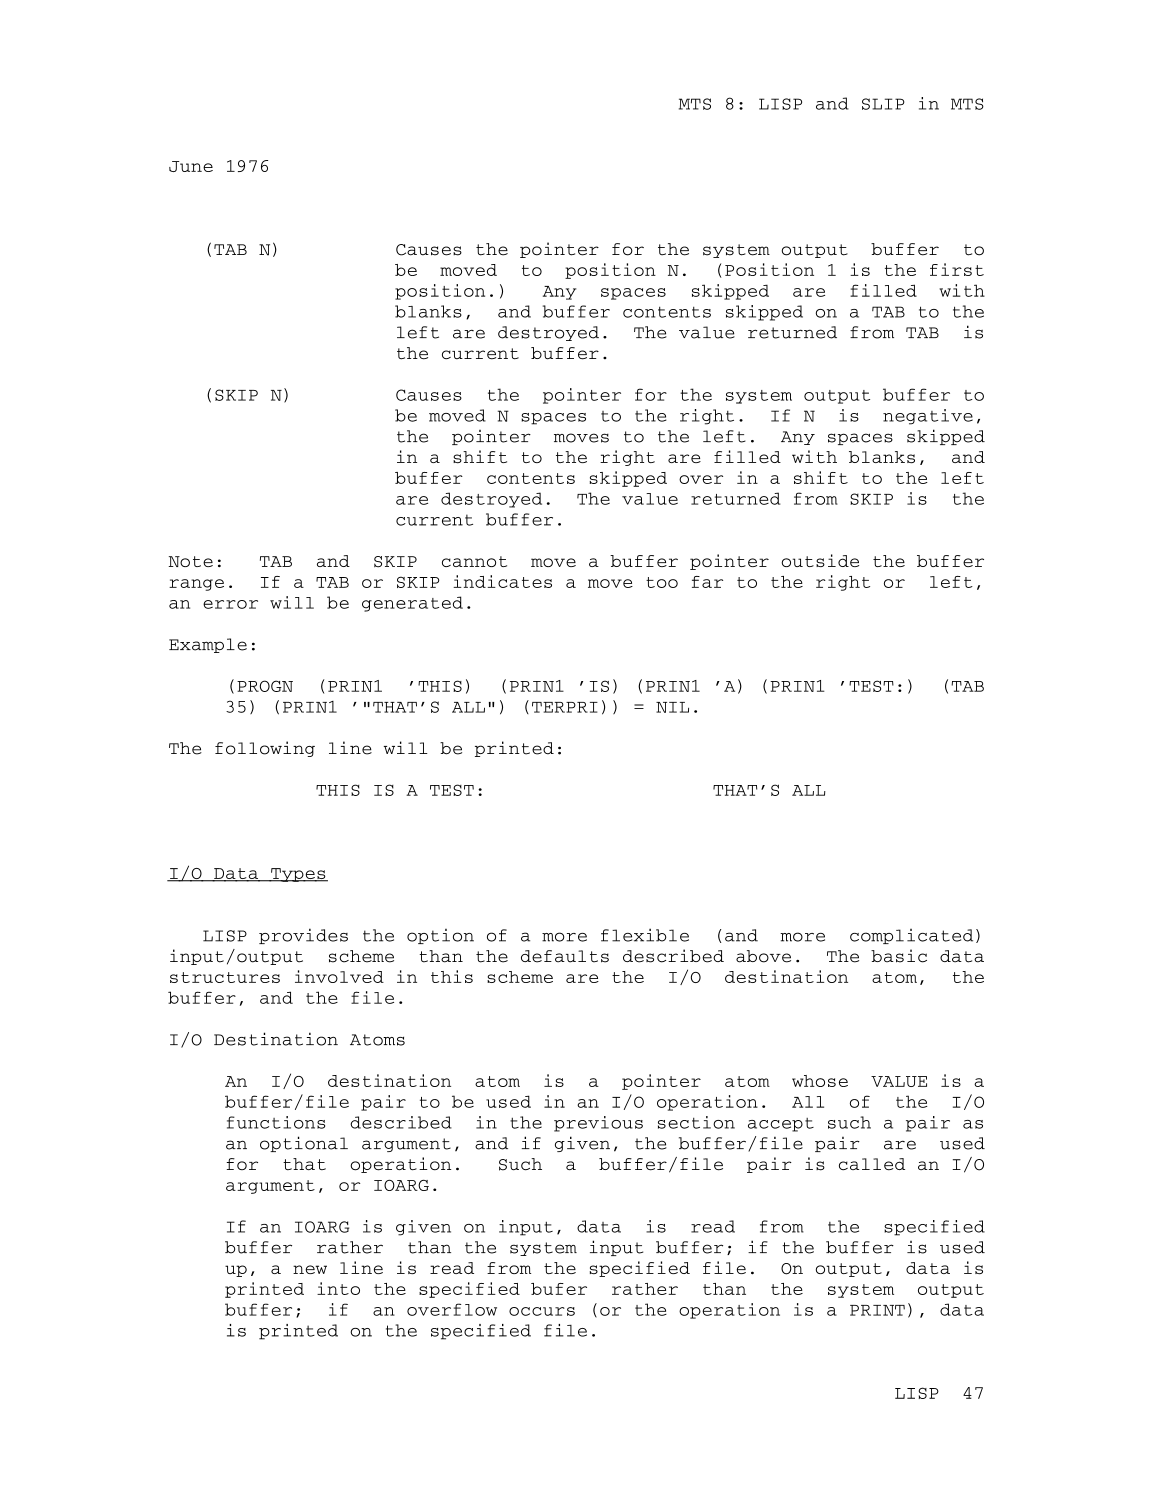 MTS Volume 8 - LISP and SLIP page 46